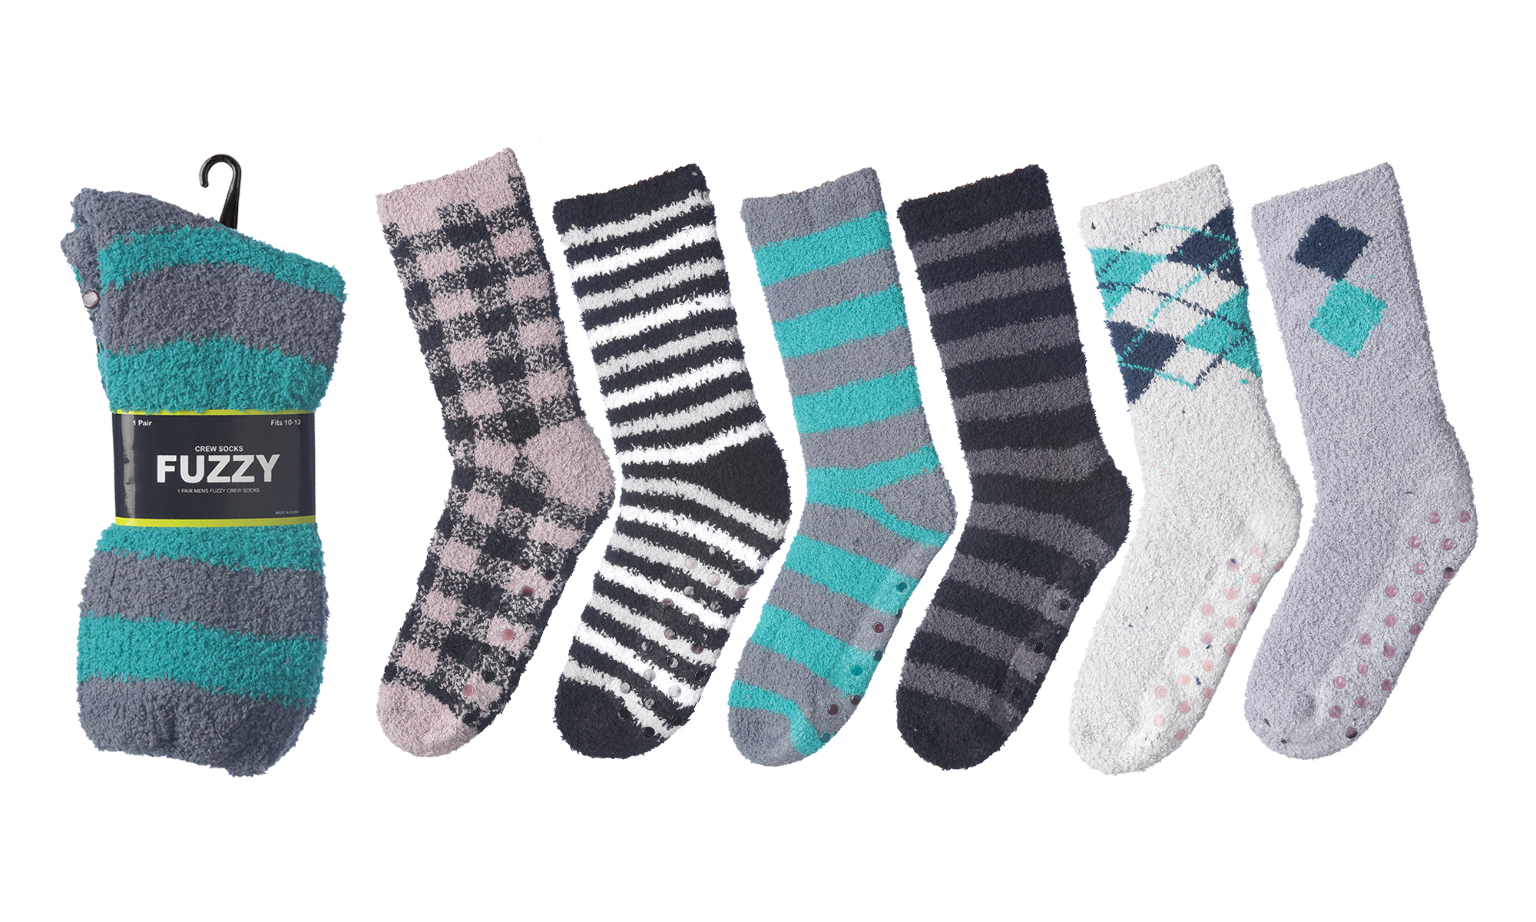 Wholesale Men's Fuzzy Skid Proof Socks - Assorted Colors